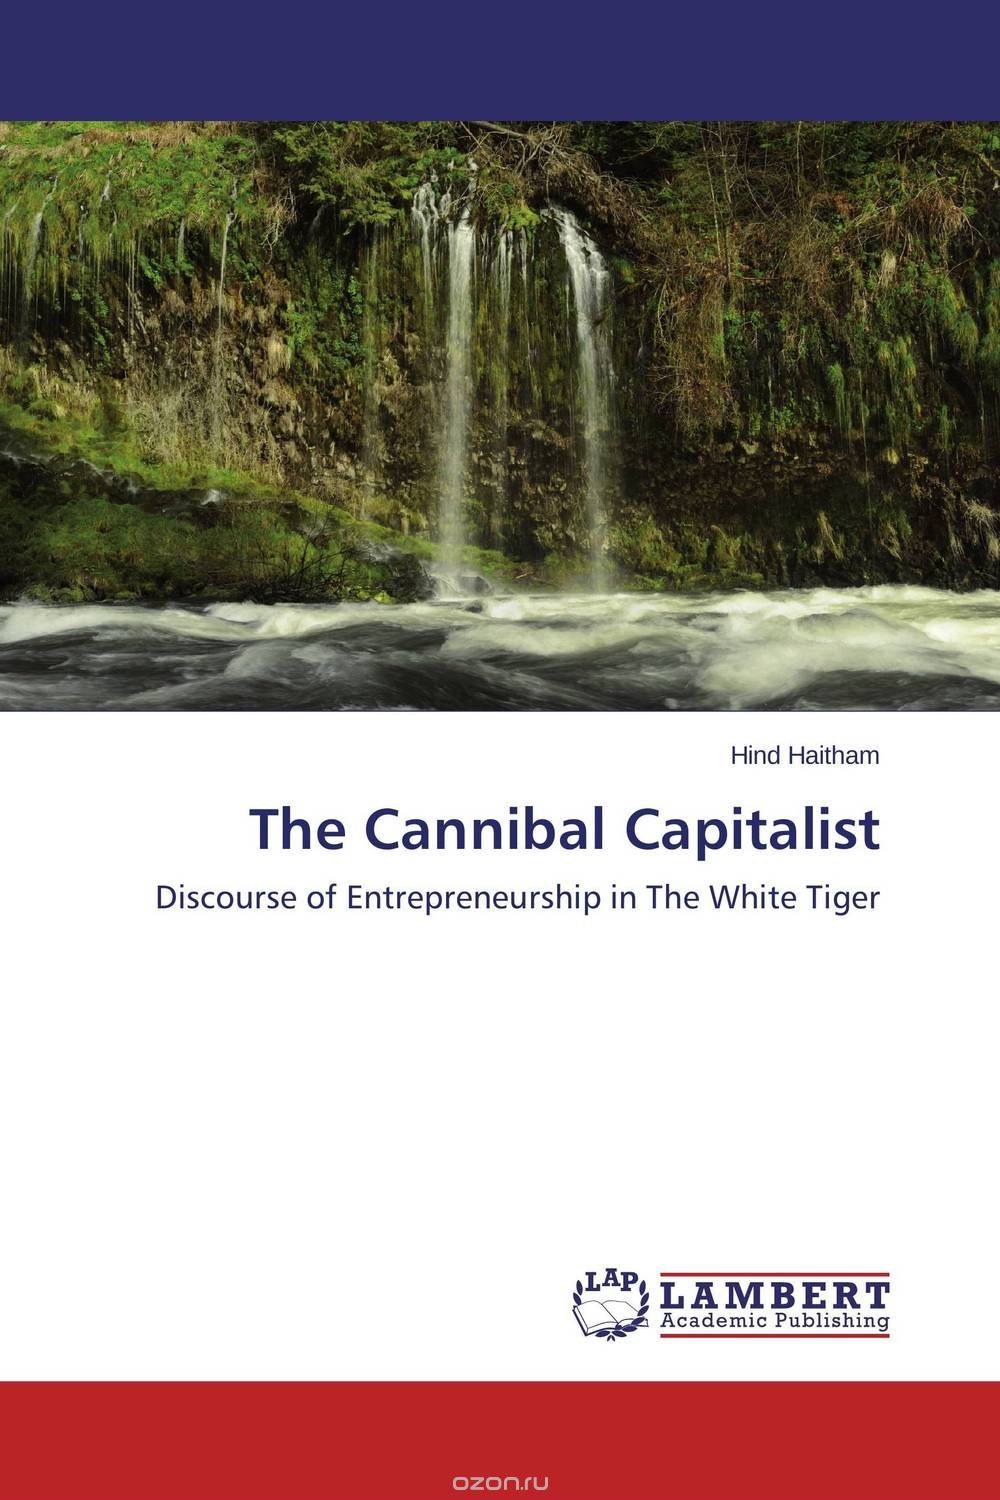 Скачать книгу "The Cannibal Capitalist"